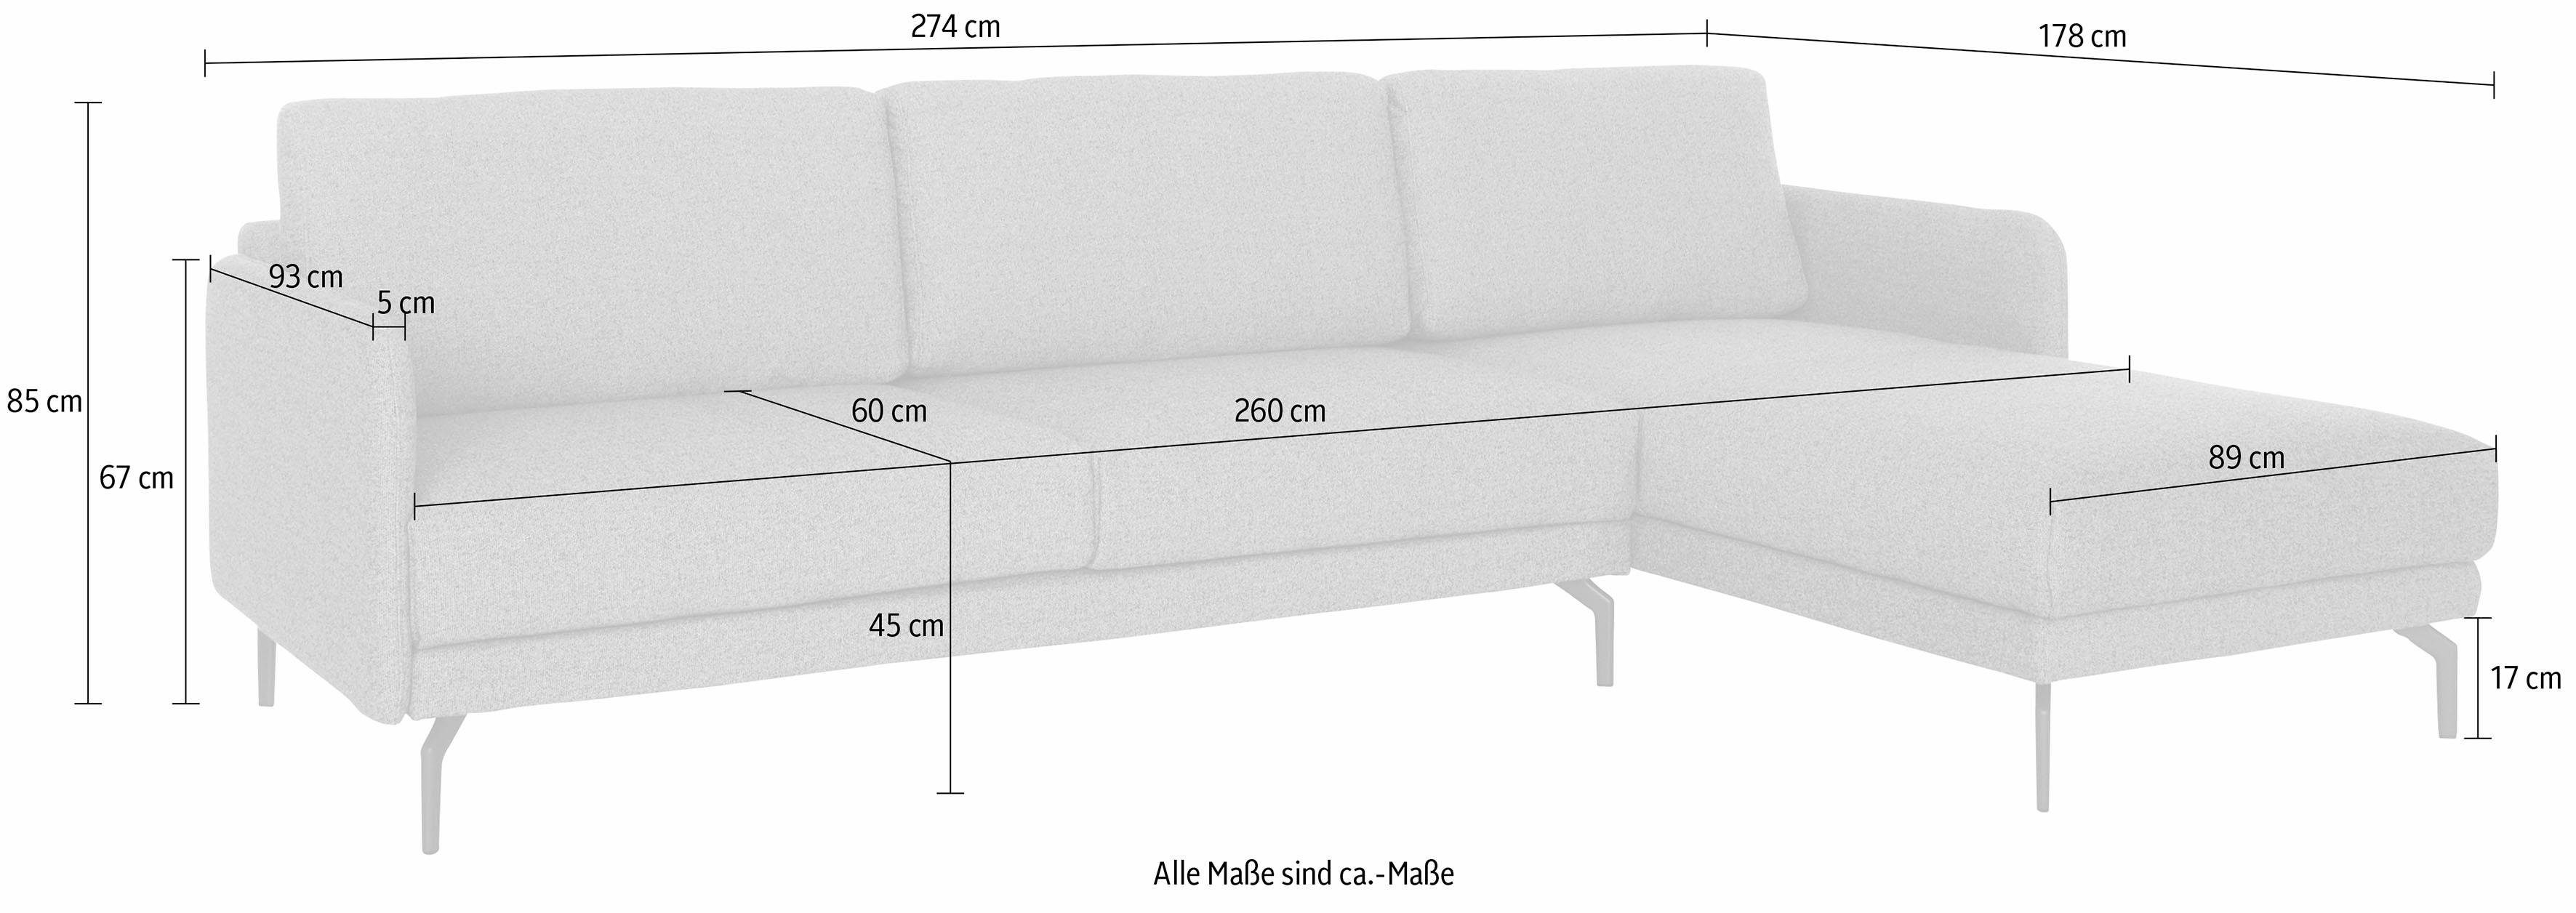 sofa Ecksofa hülsta Umbragrau sehr cm, schmal, 274 Breite Alugussfuß hs.450, Armlehne